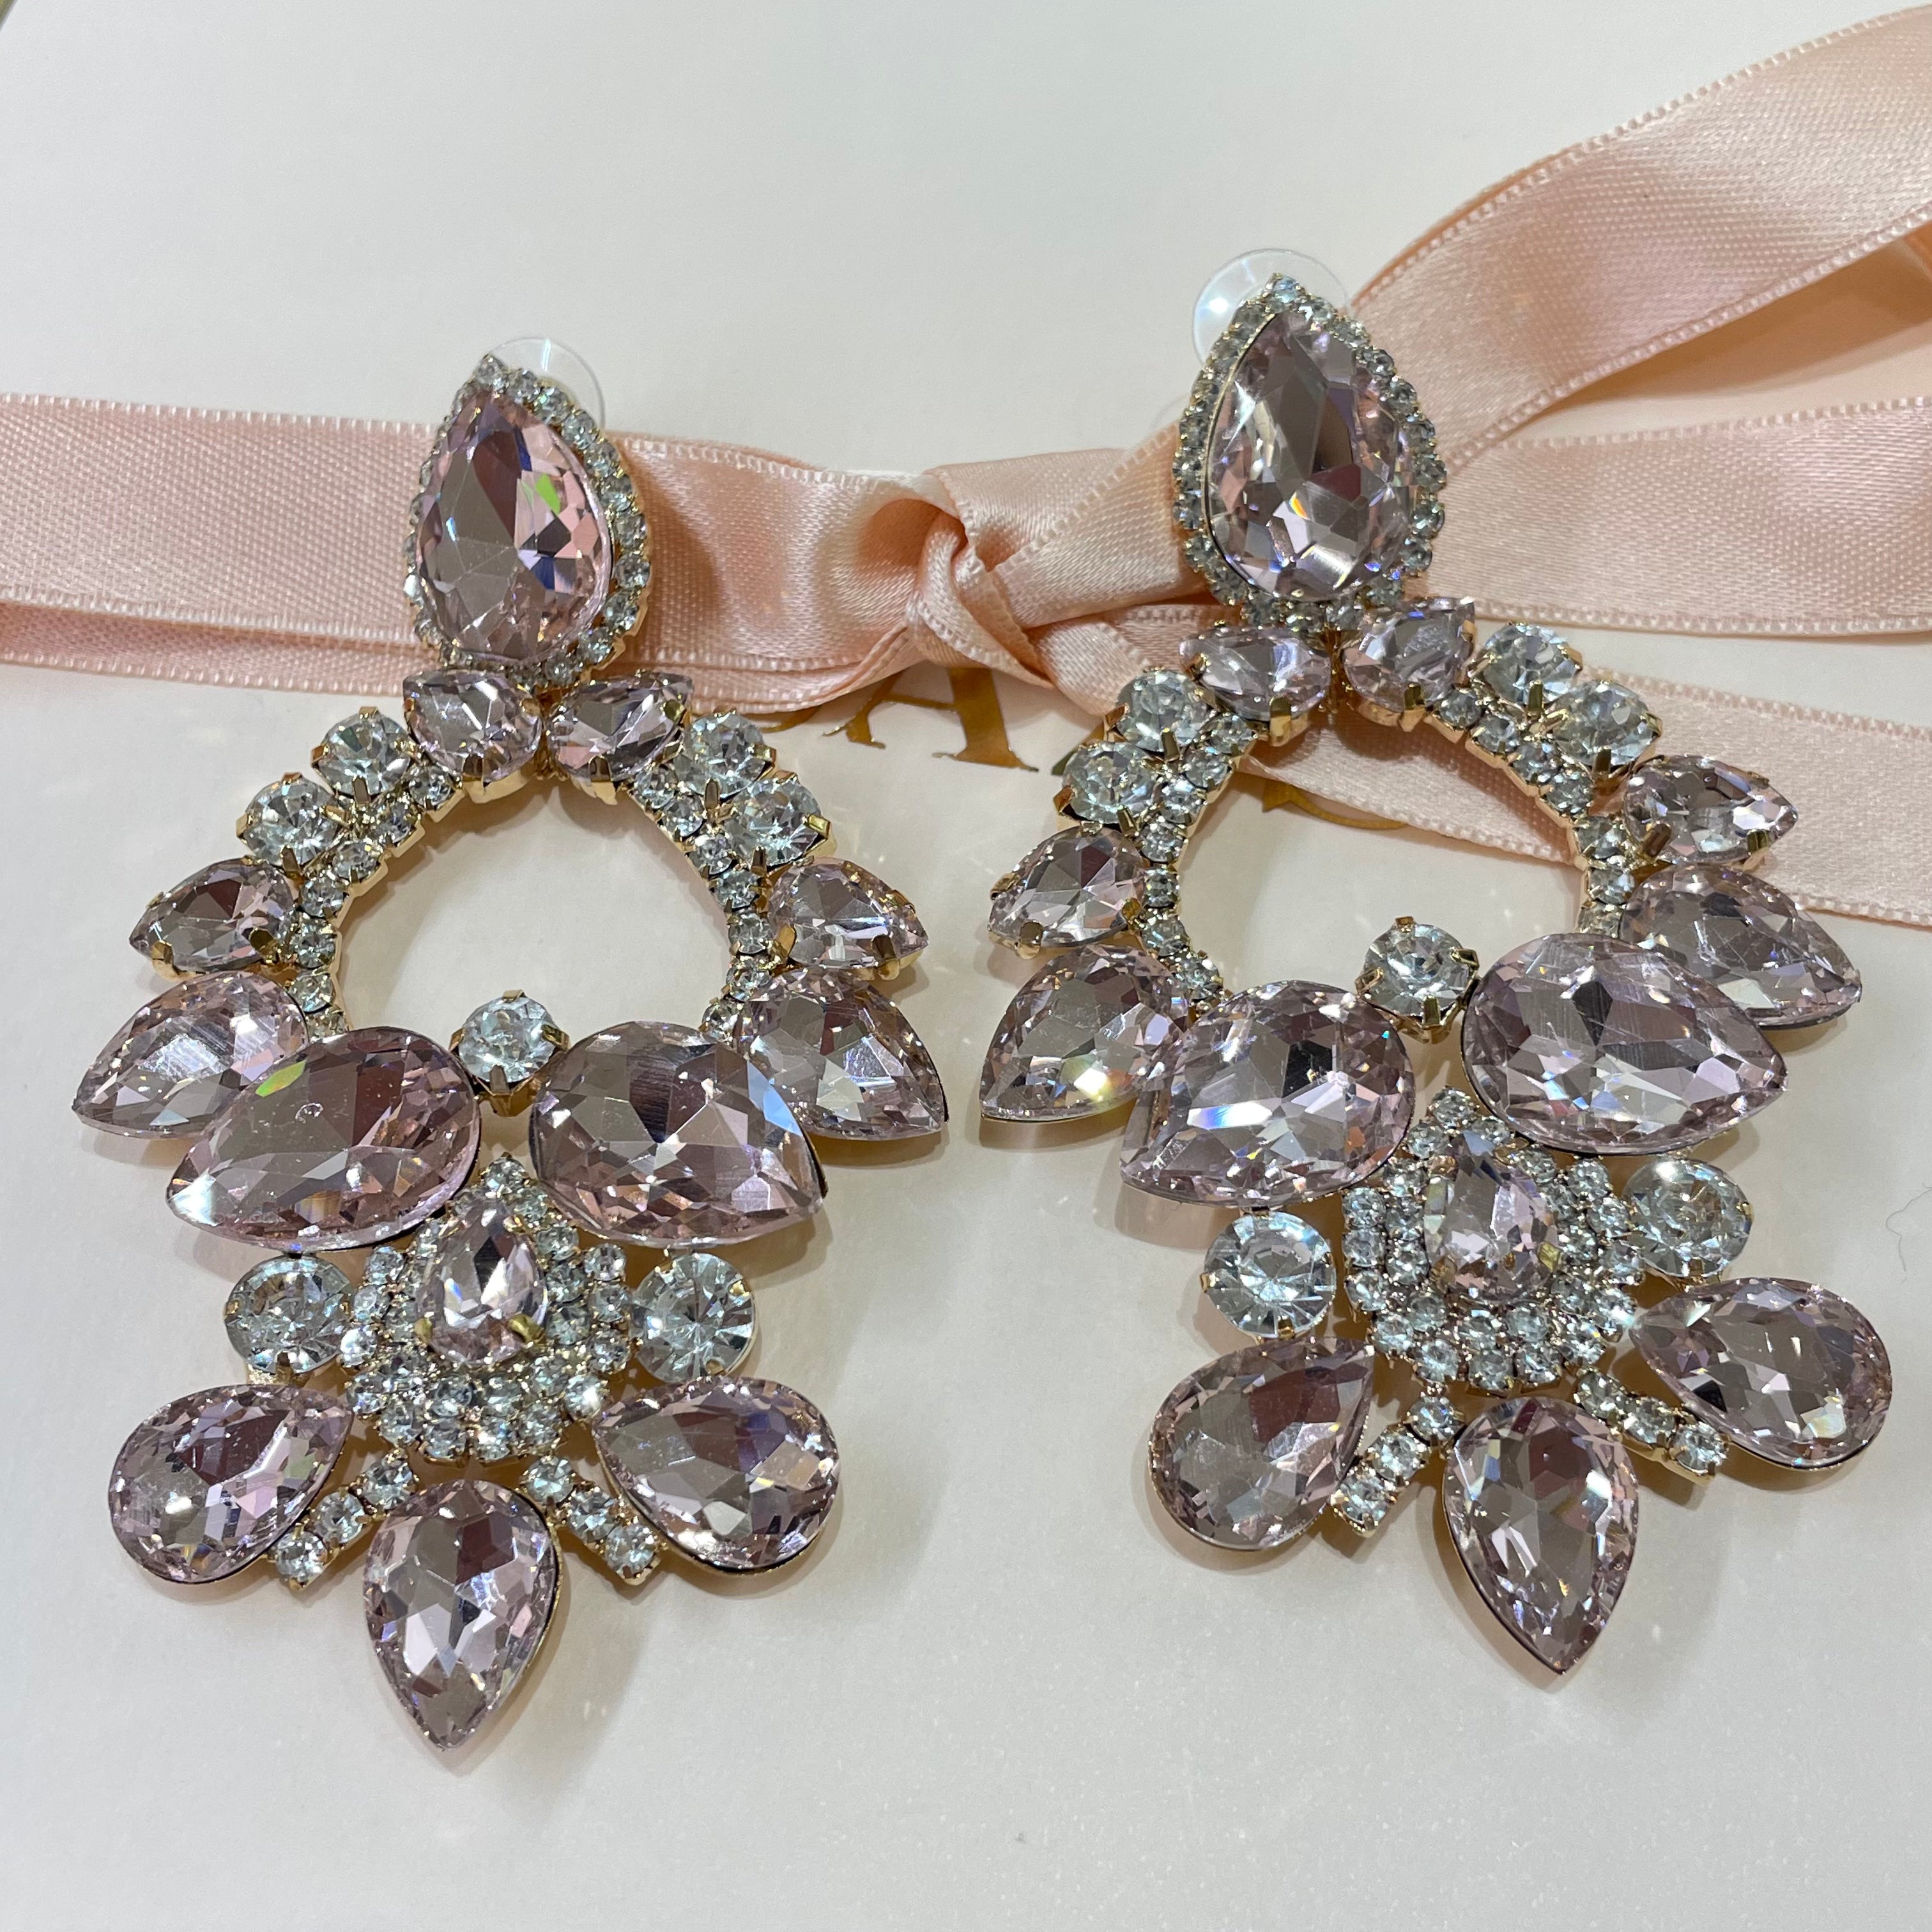 Light pink earrings